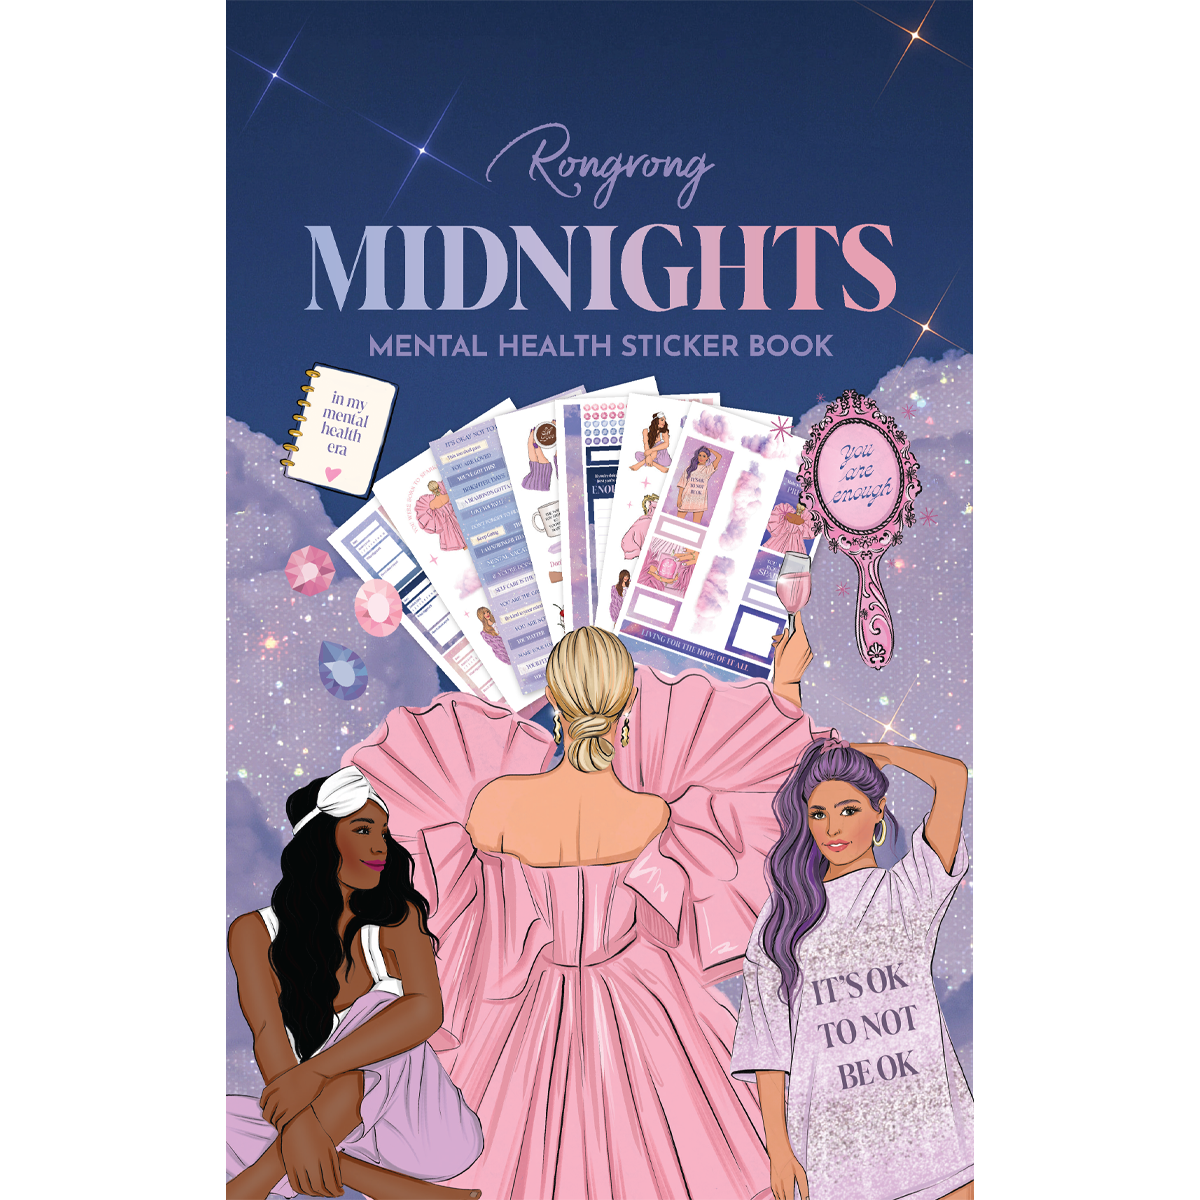 Shop Rongrong Midnights mental health sticker book